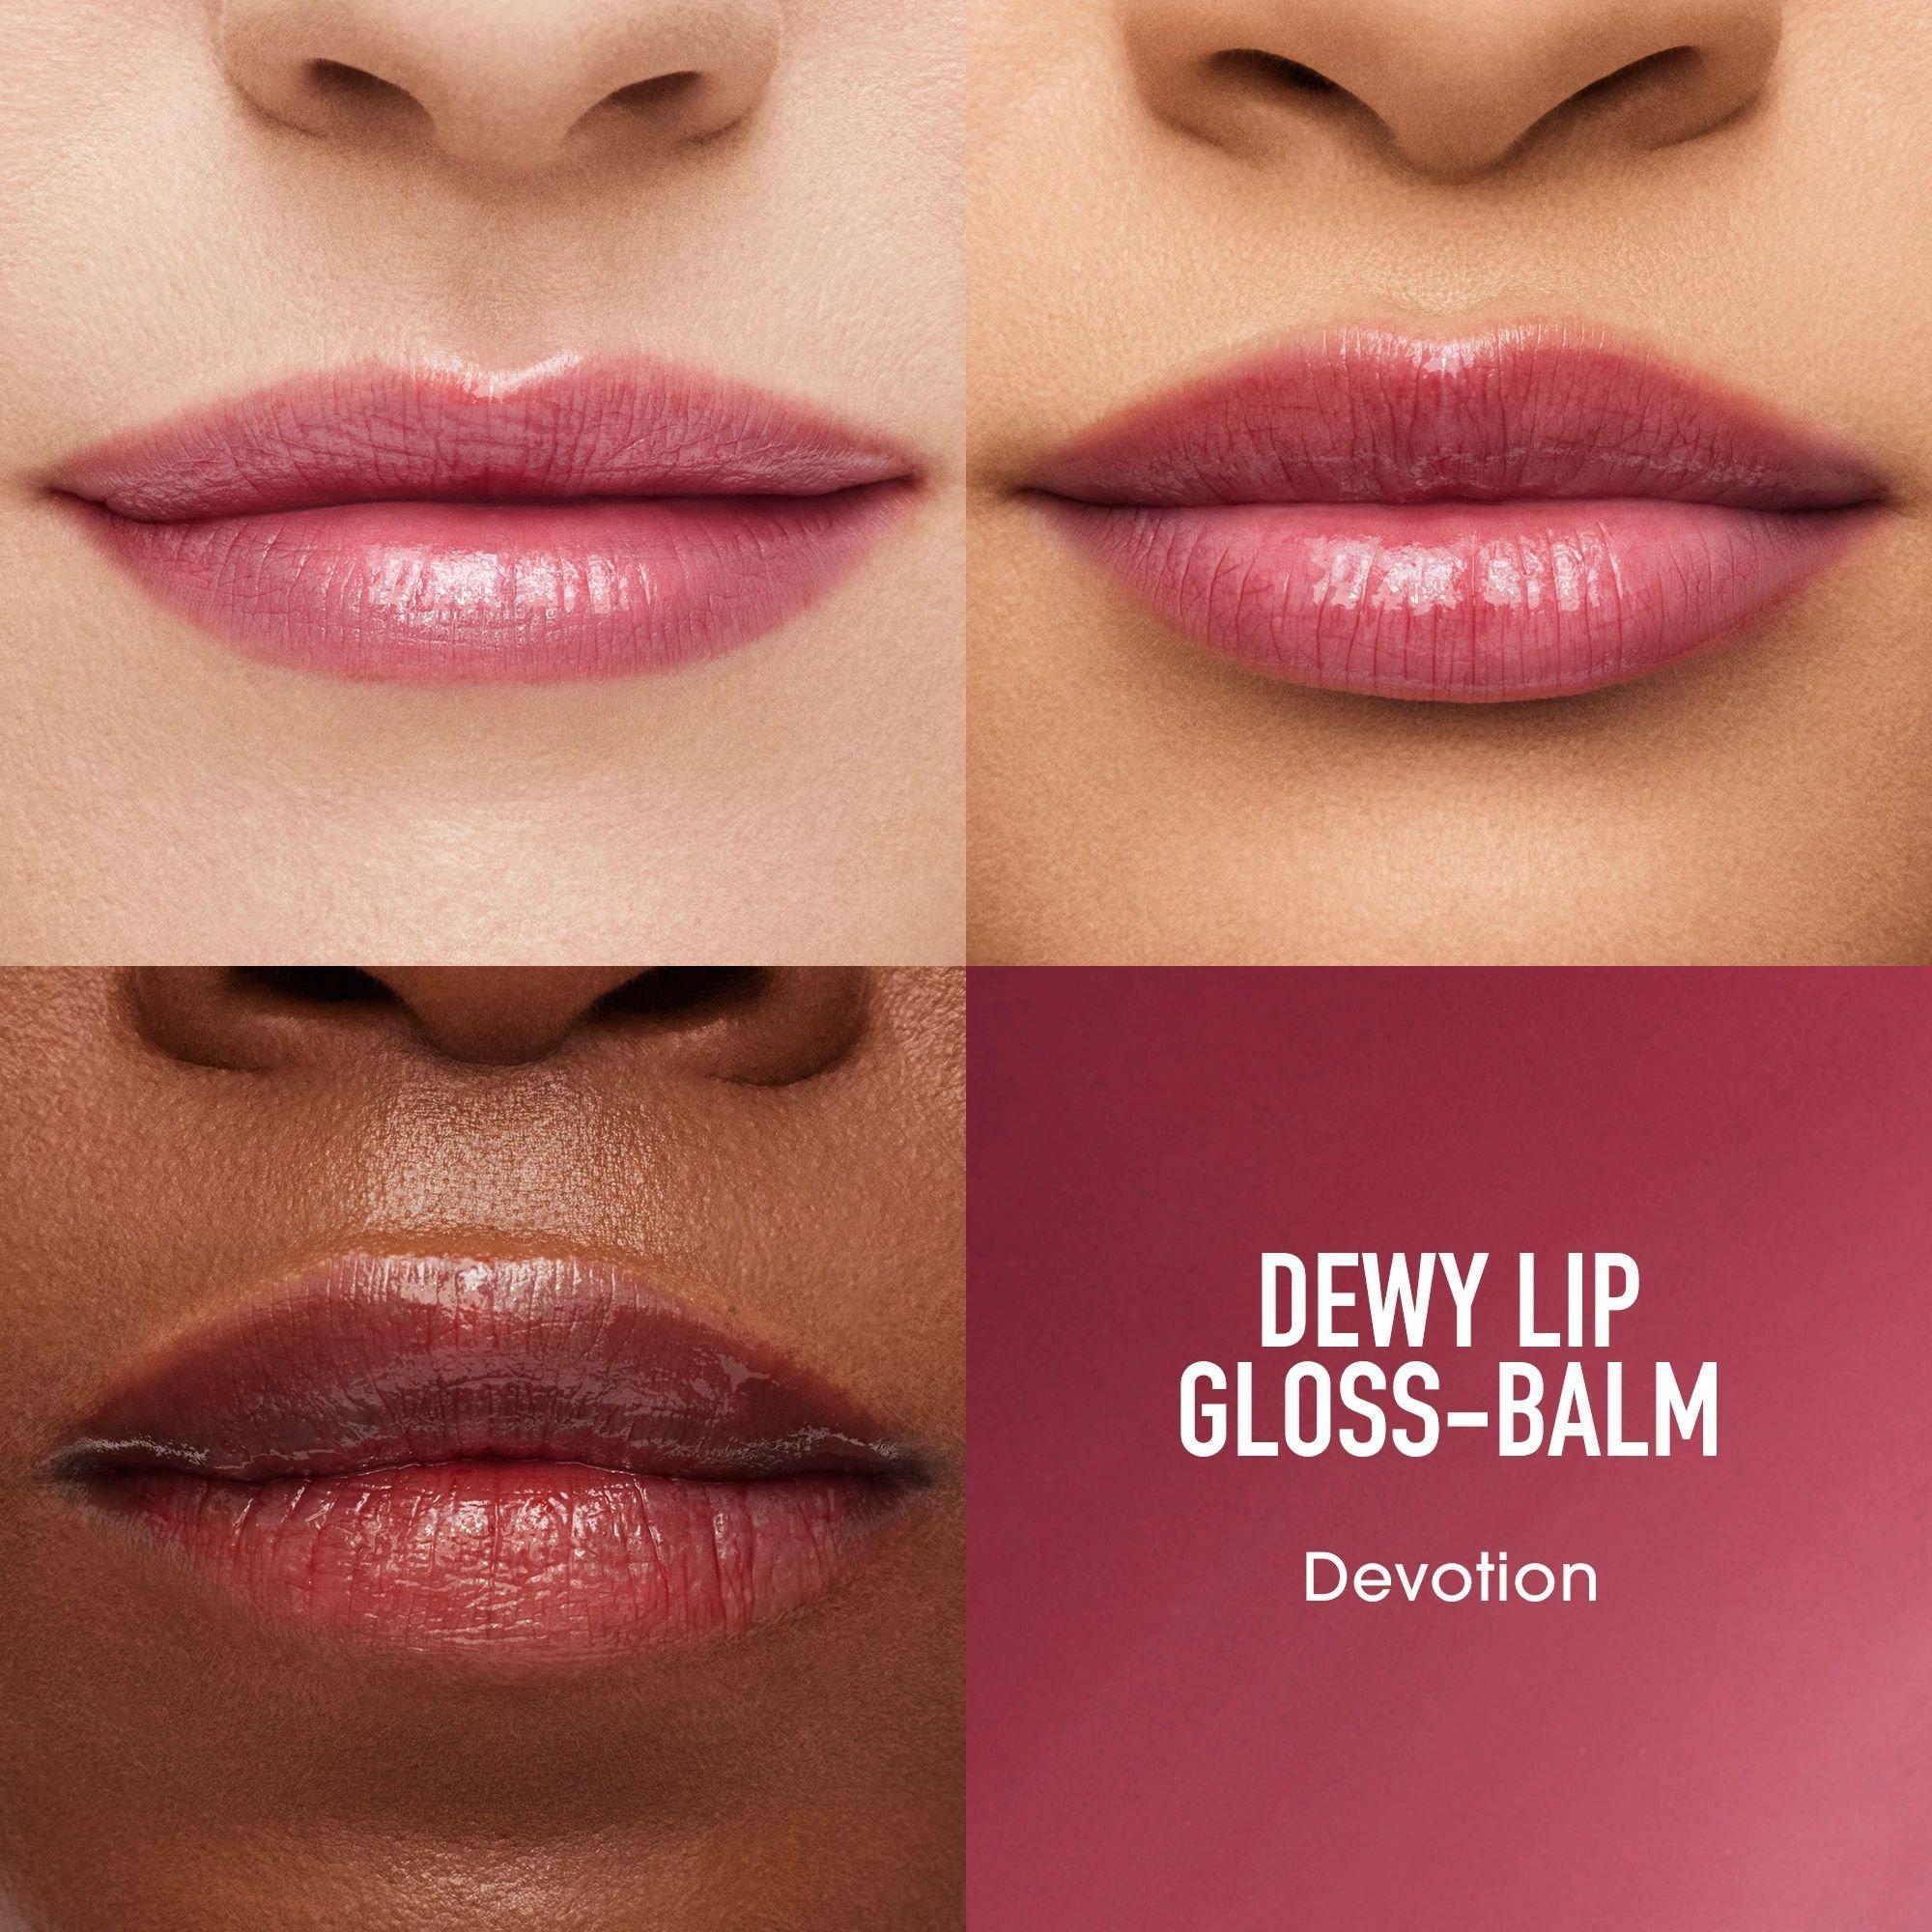 bareMinerals Dewy Lip Gloss-Balm / Devotion